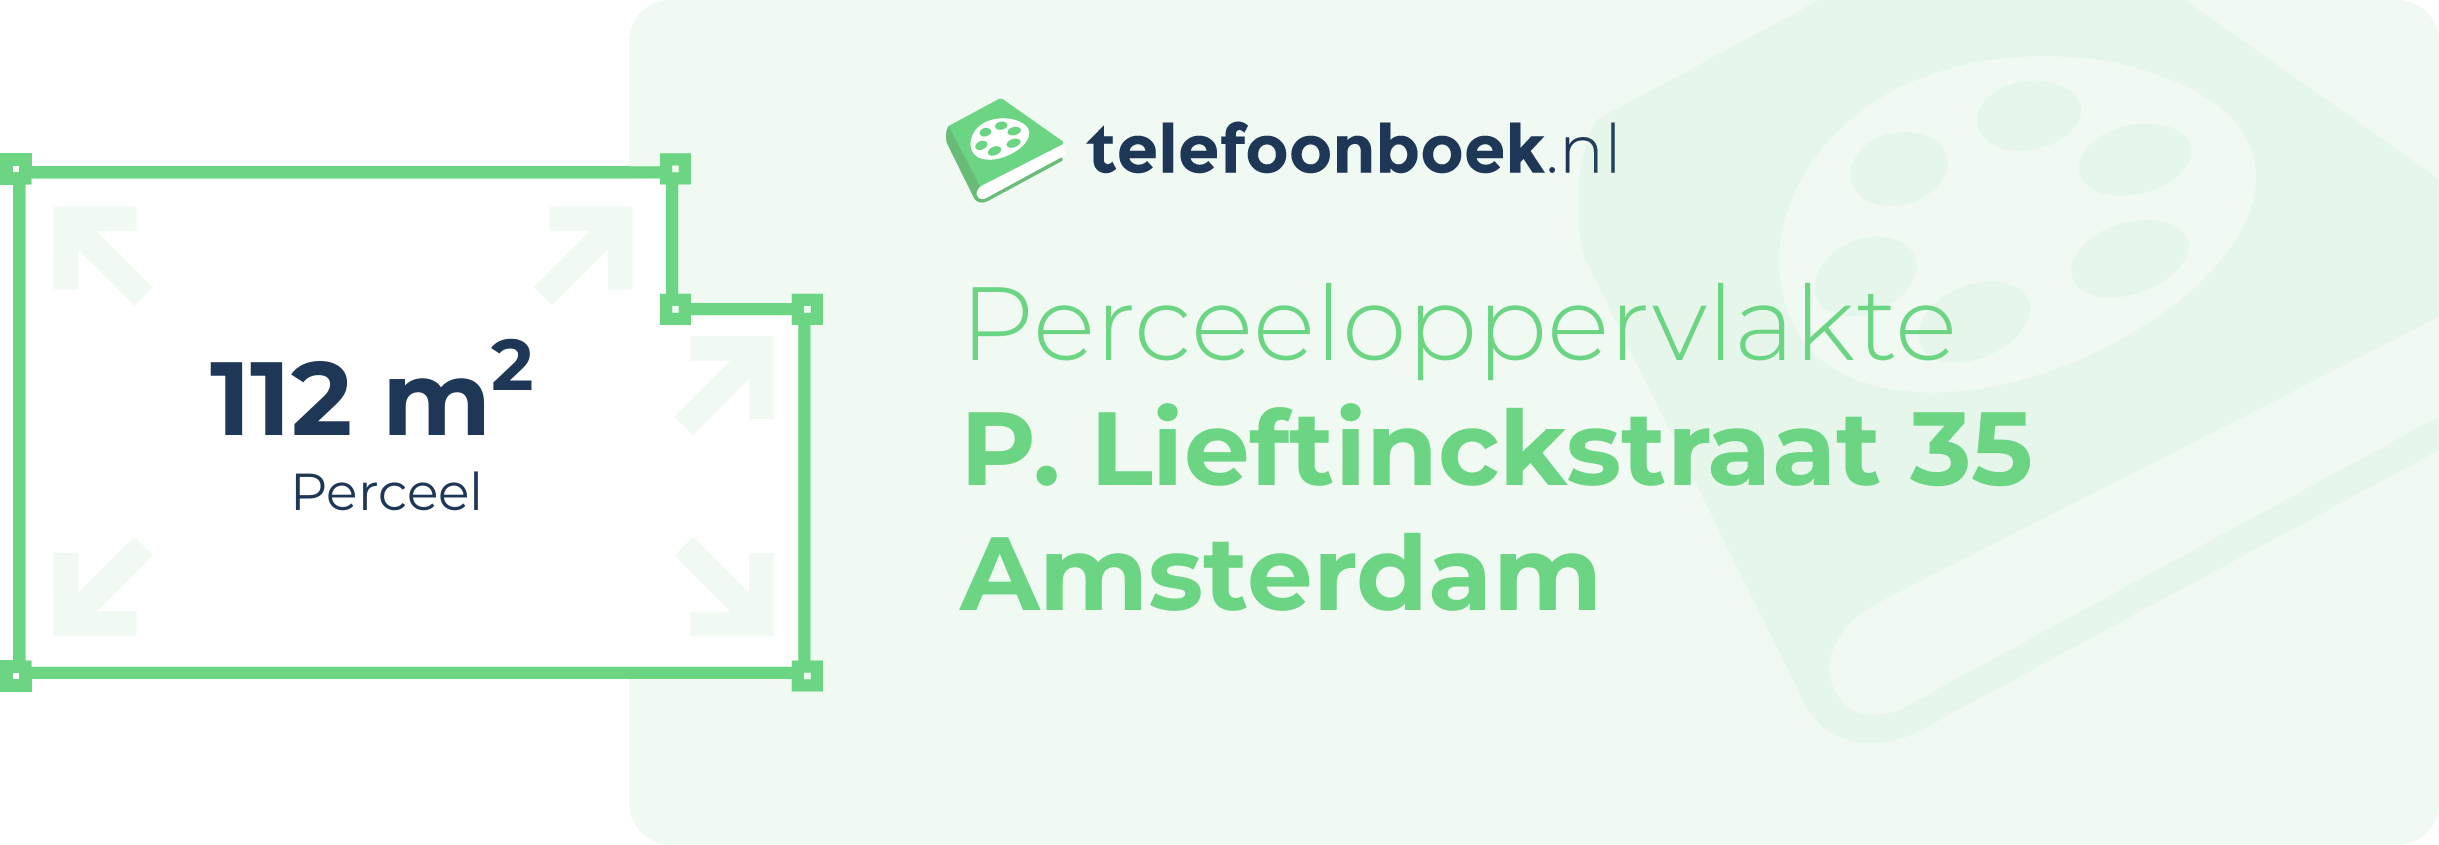 Perceeloppervlakte P. Lieftinckstraat 35 Amsterdam